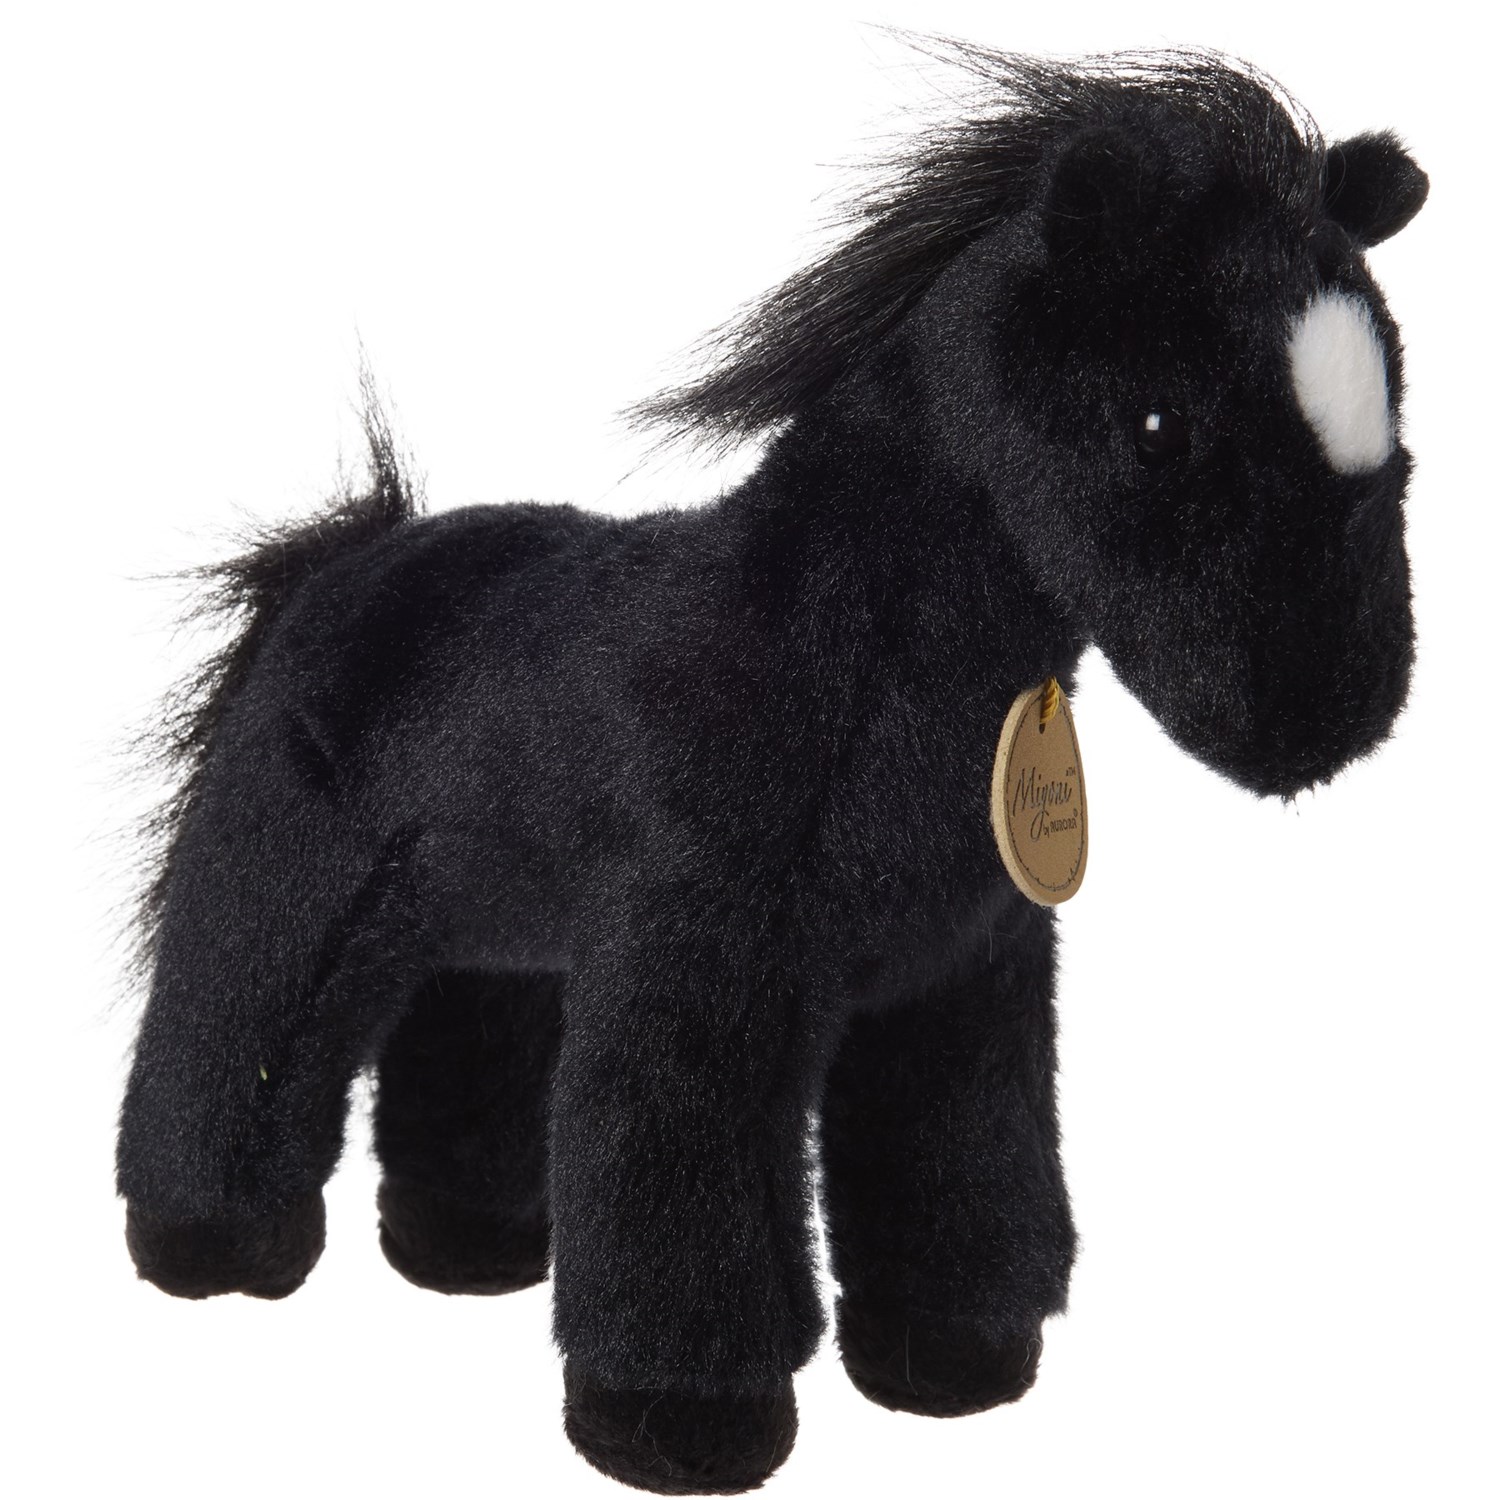 aurora horse stuffed animal